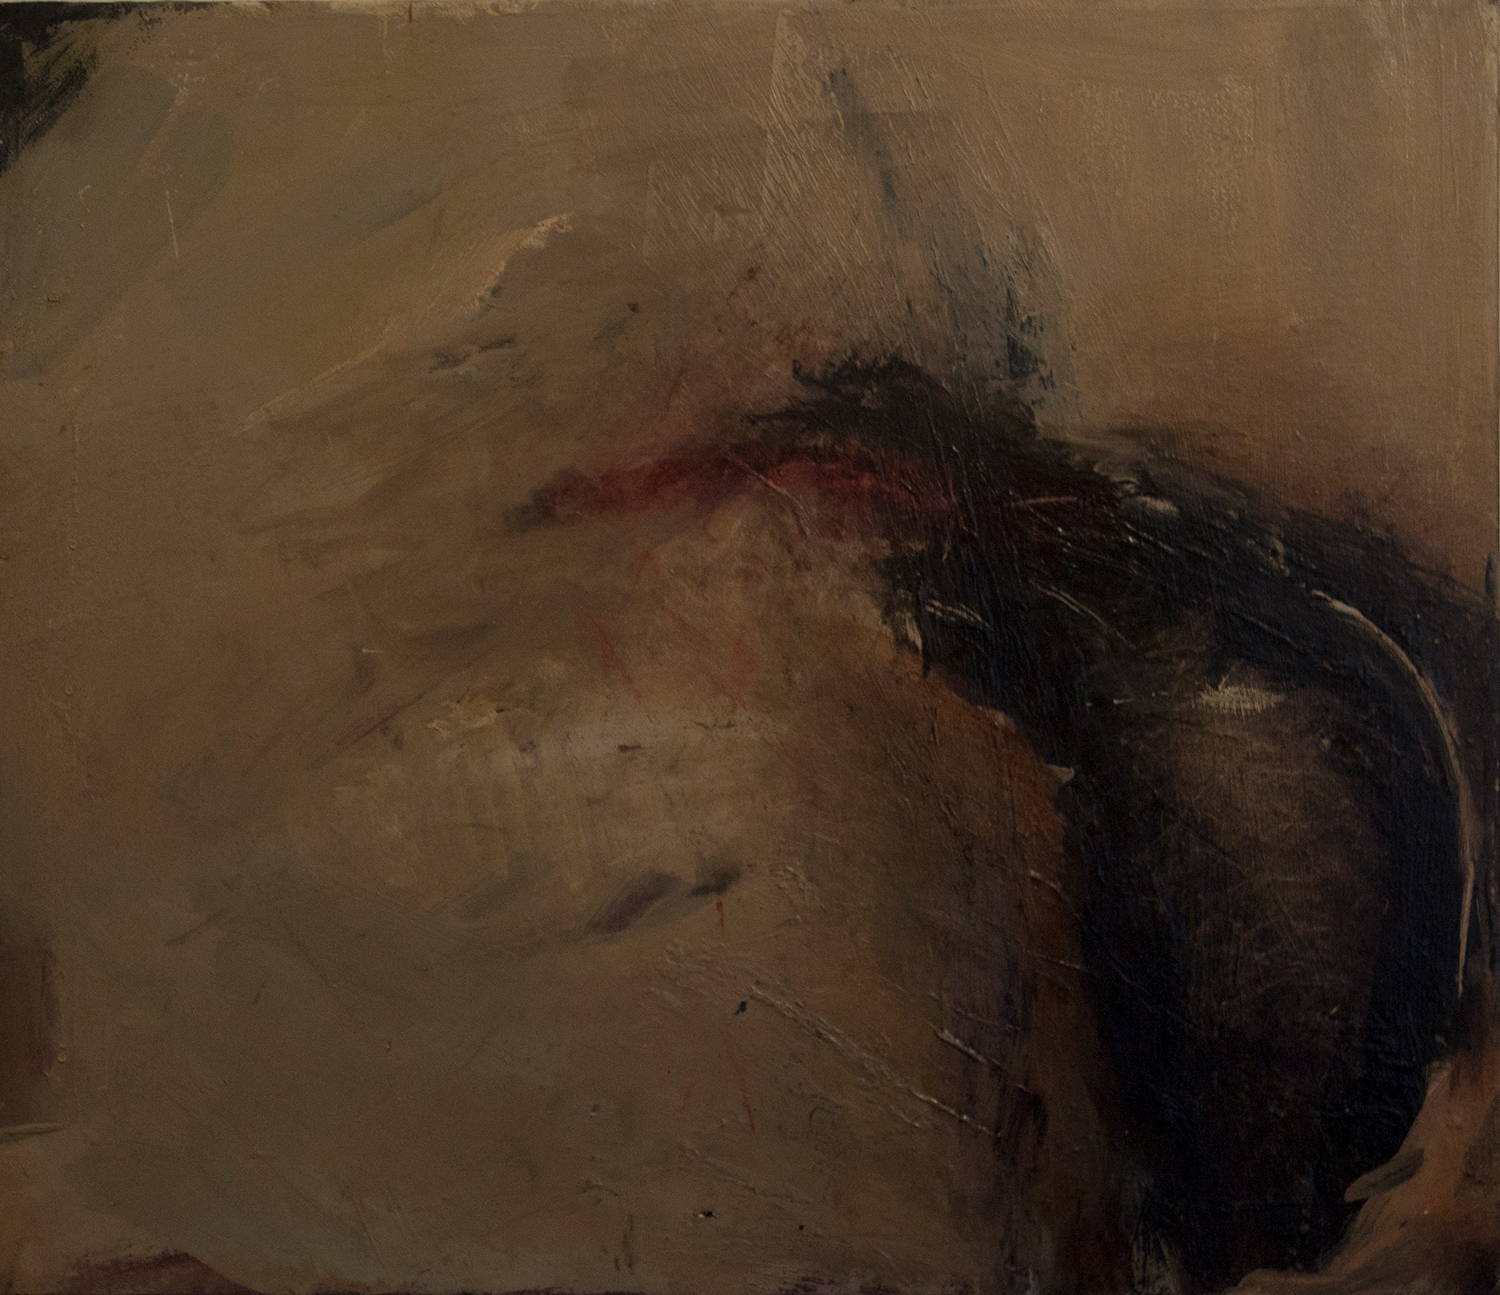 Jules Allan - A vestige 2, 60cm x 70cm, oil on canvas